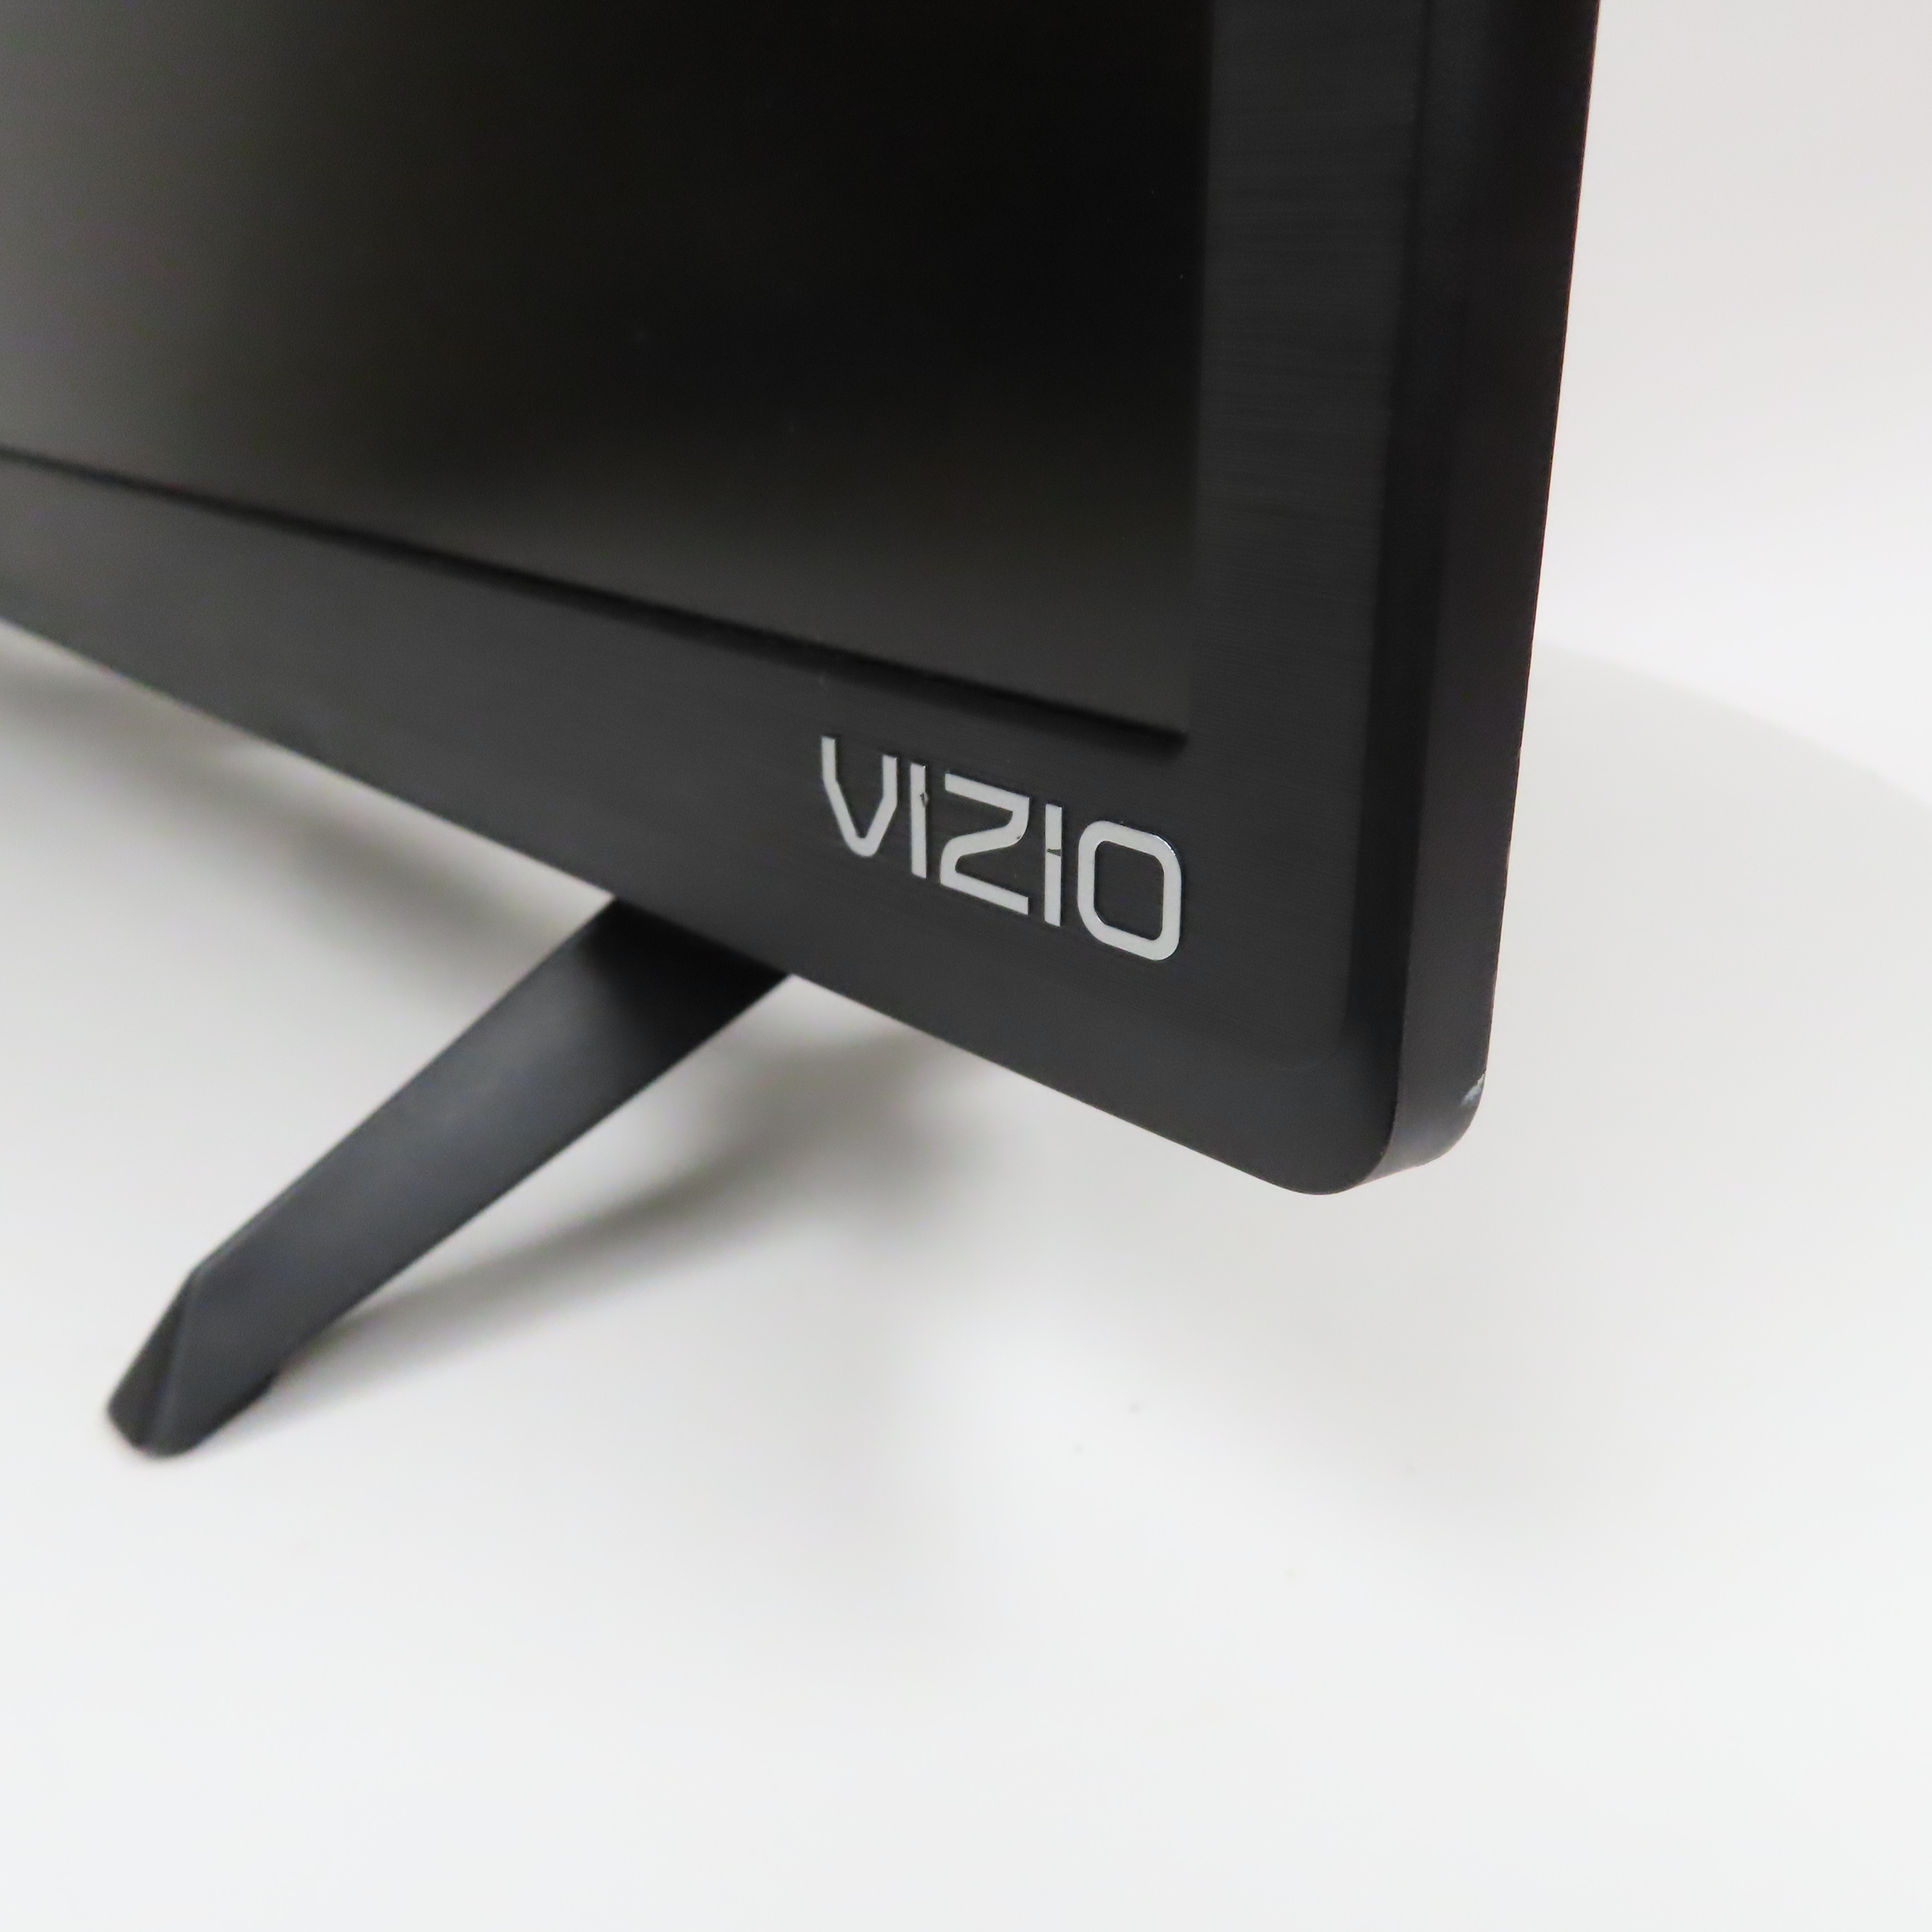 VIZIO 24 Class D-Series FHD LED Smart TV D24f-J09 